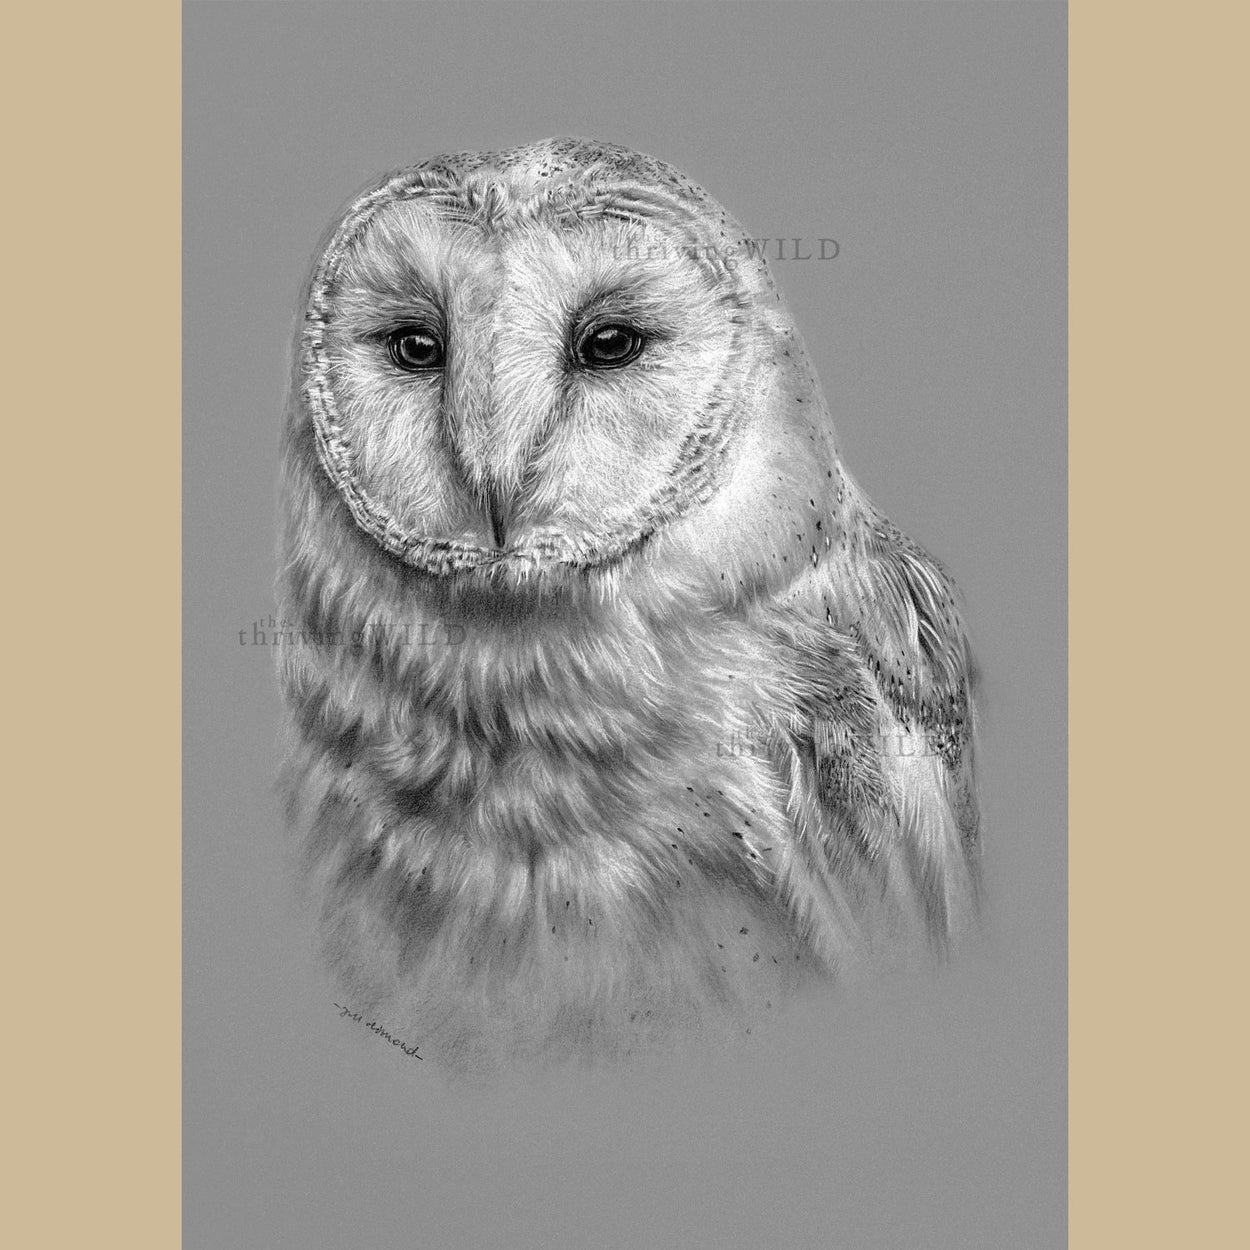 Barn Owl Charcoal Drawing - The Thriving Wild - Jill Dimond